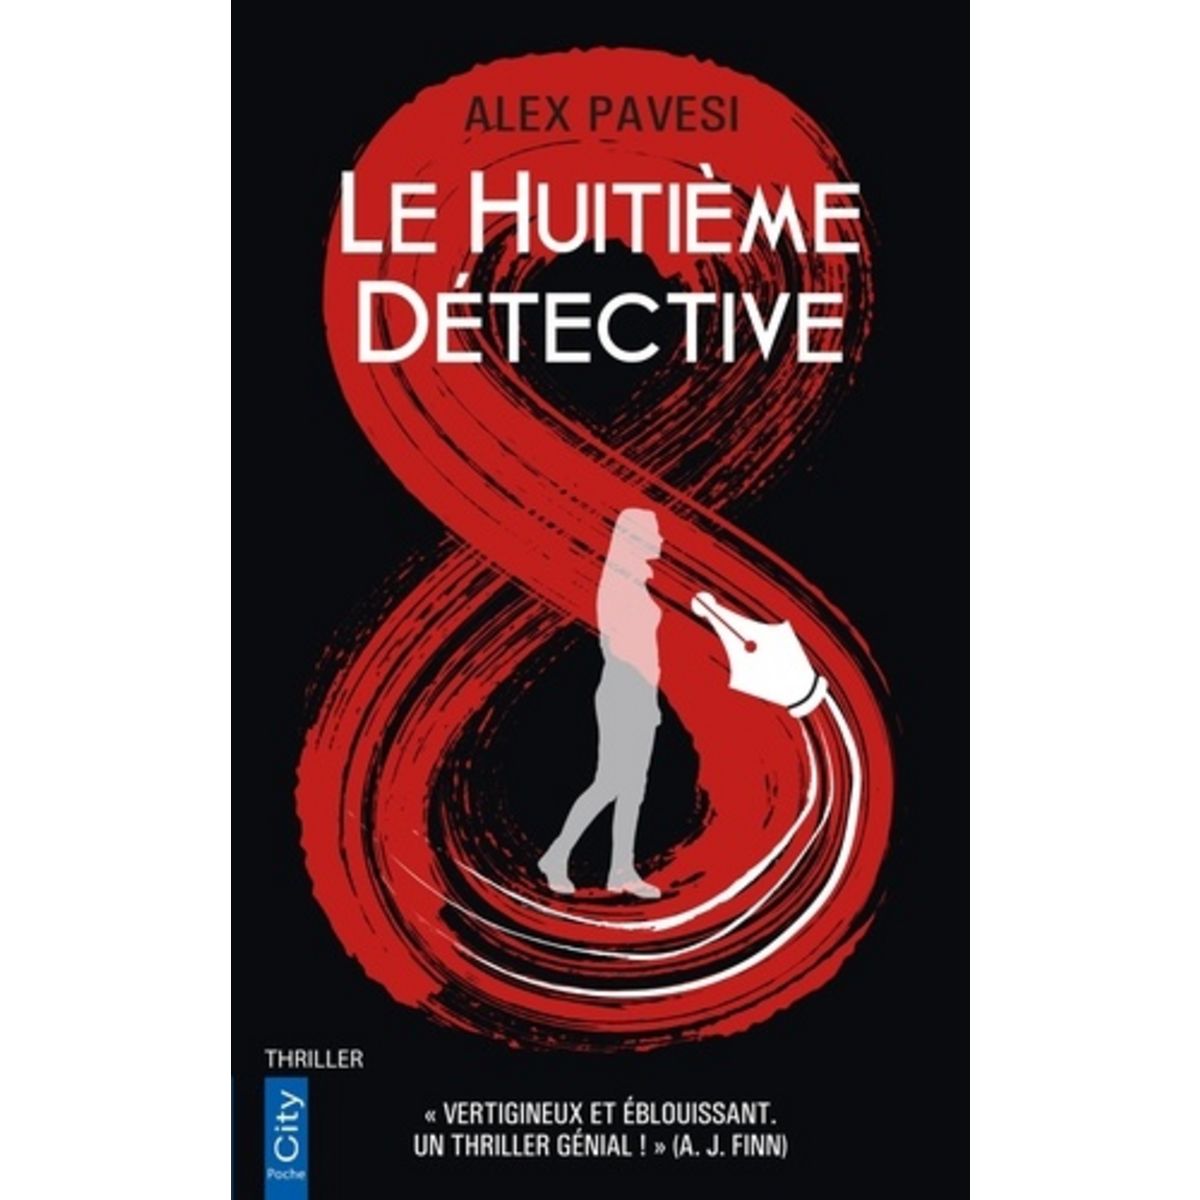  LE HUITIEME DETECTIVE, Pavesi Alex